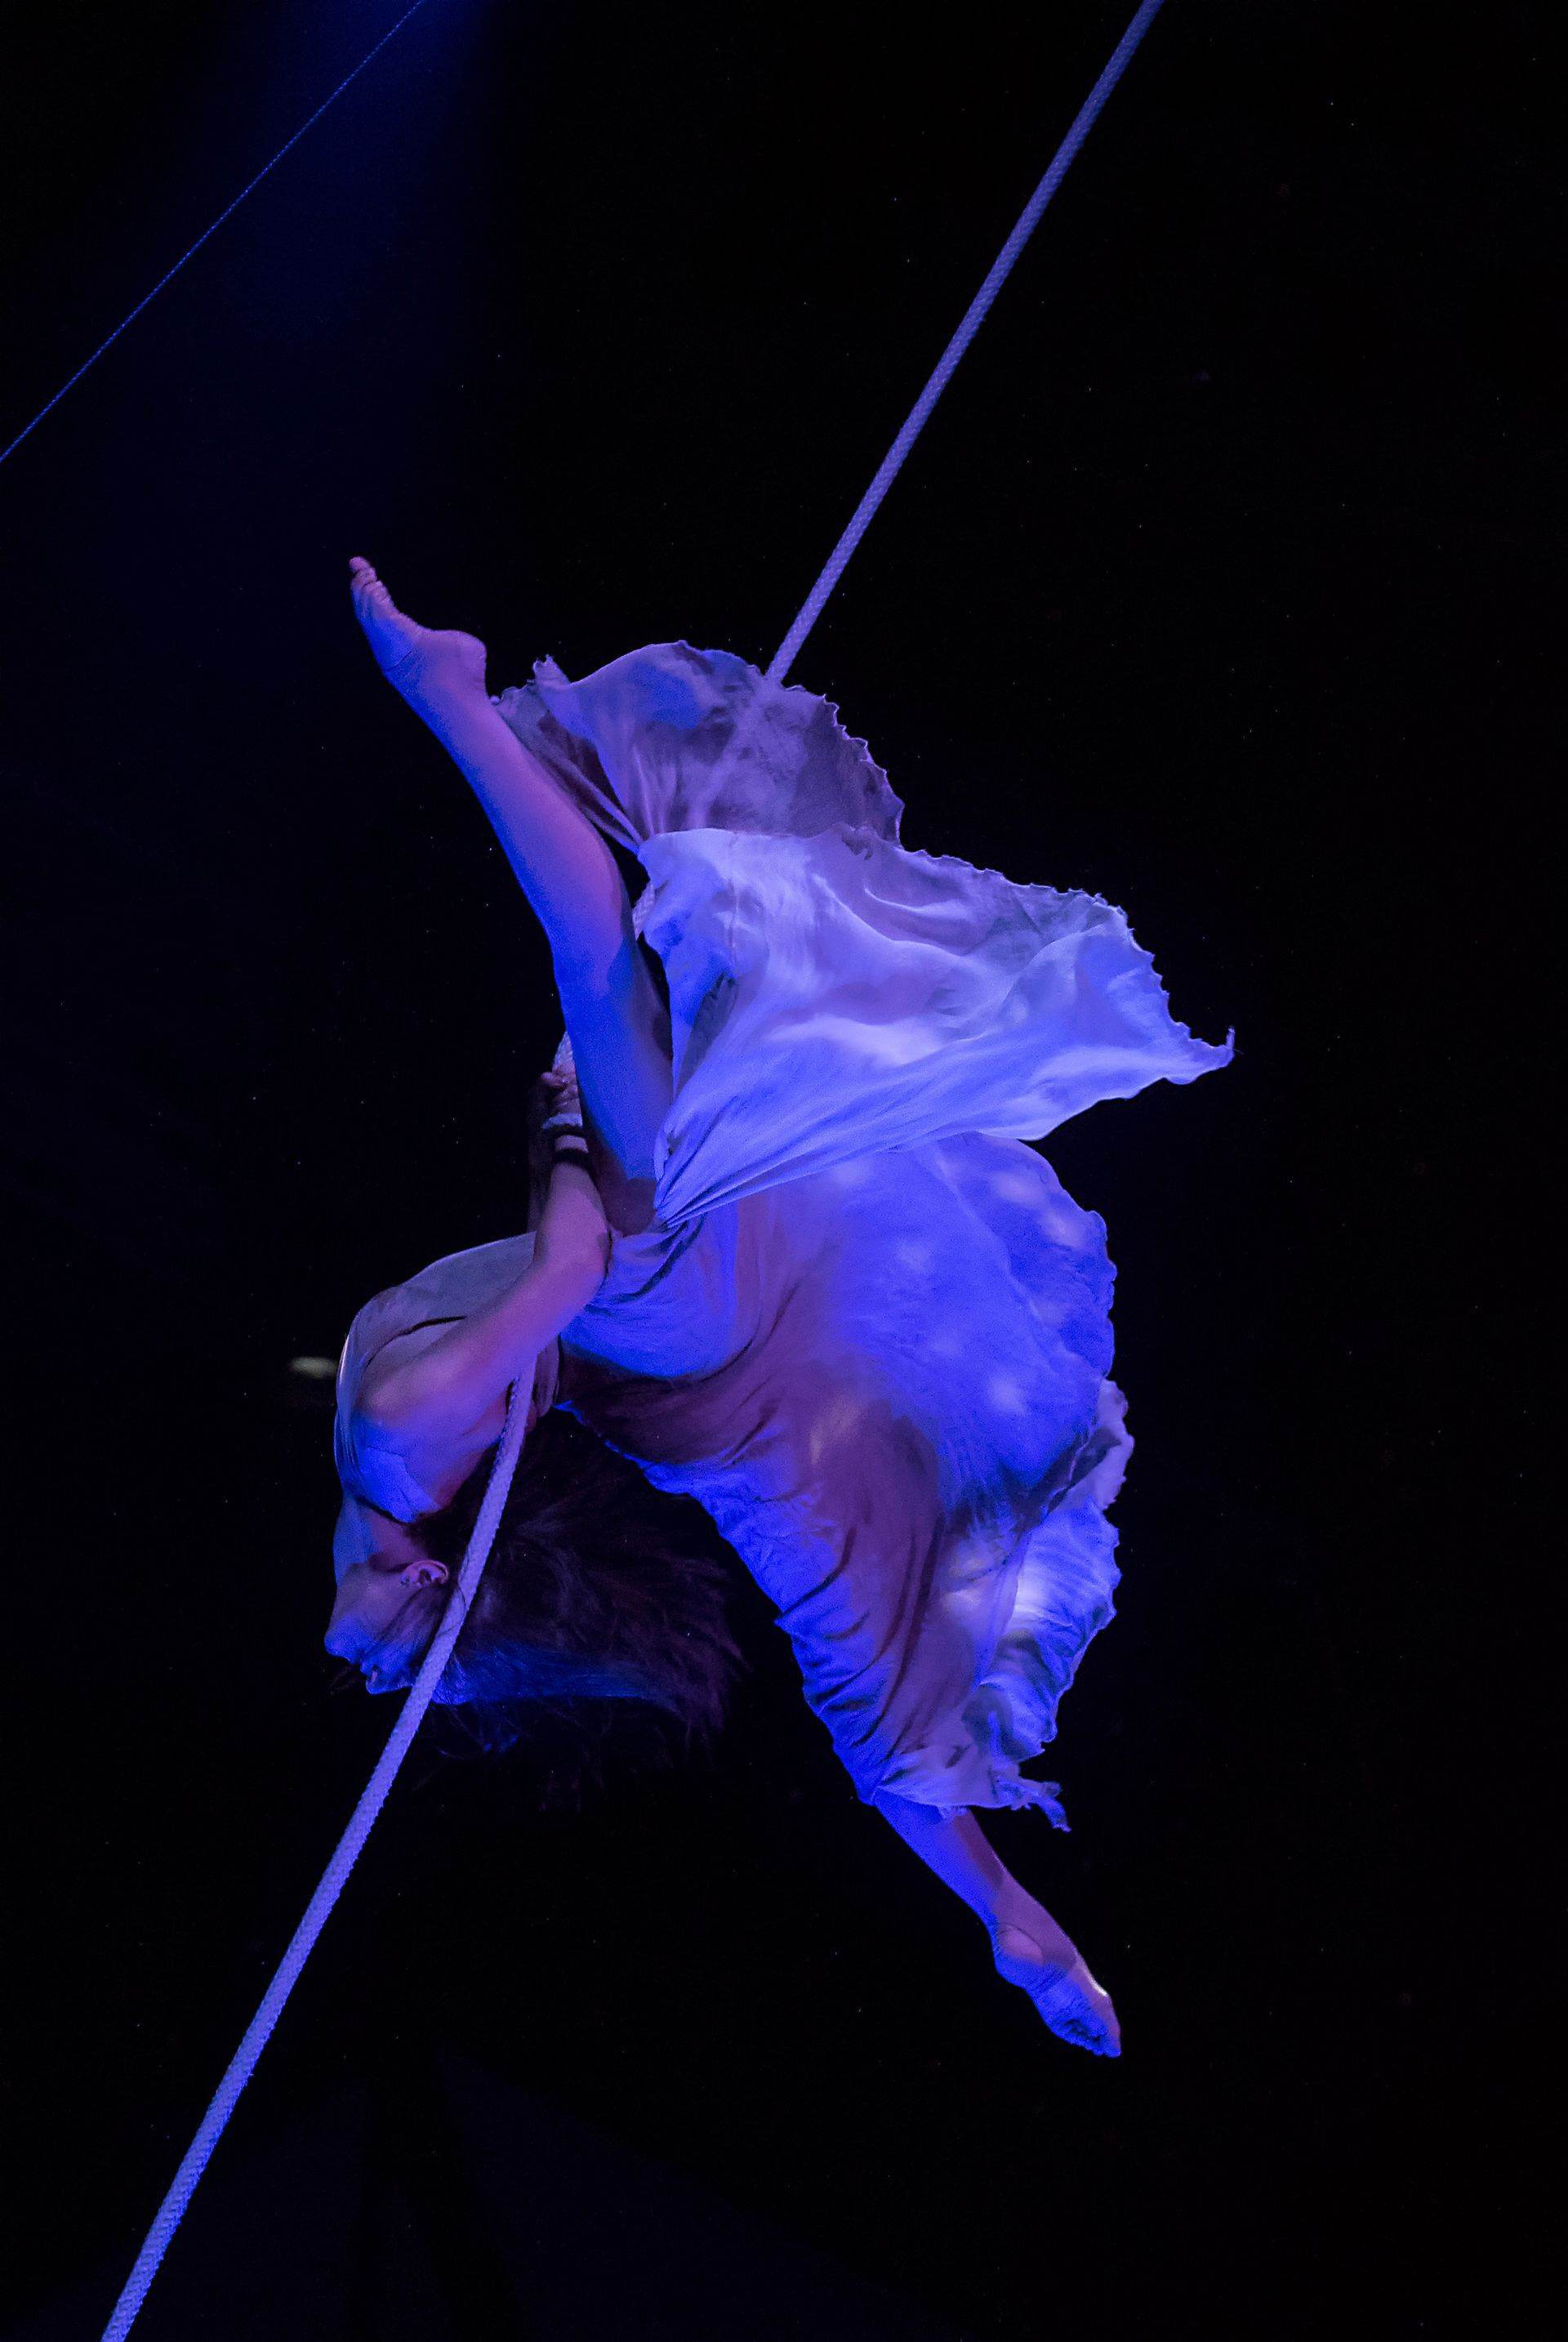 Scalada - Vision by Cirque du Soleil 2016: Dansa aèria amb corda